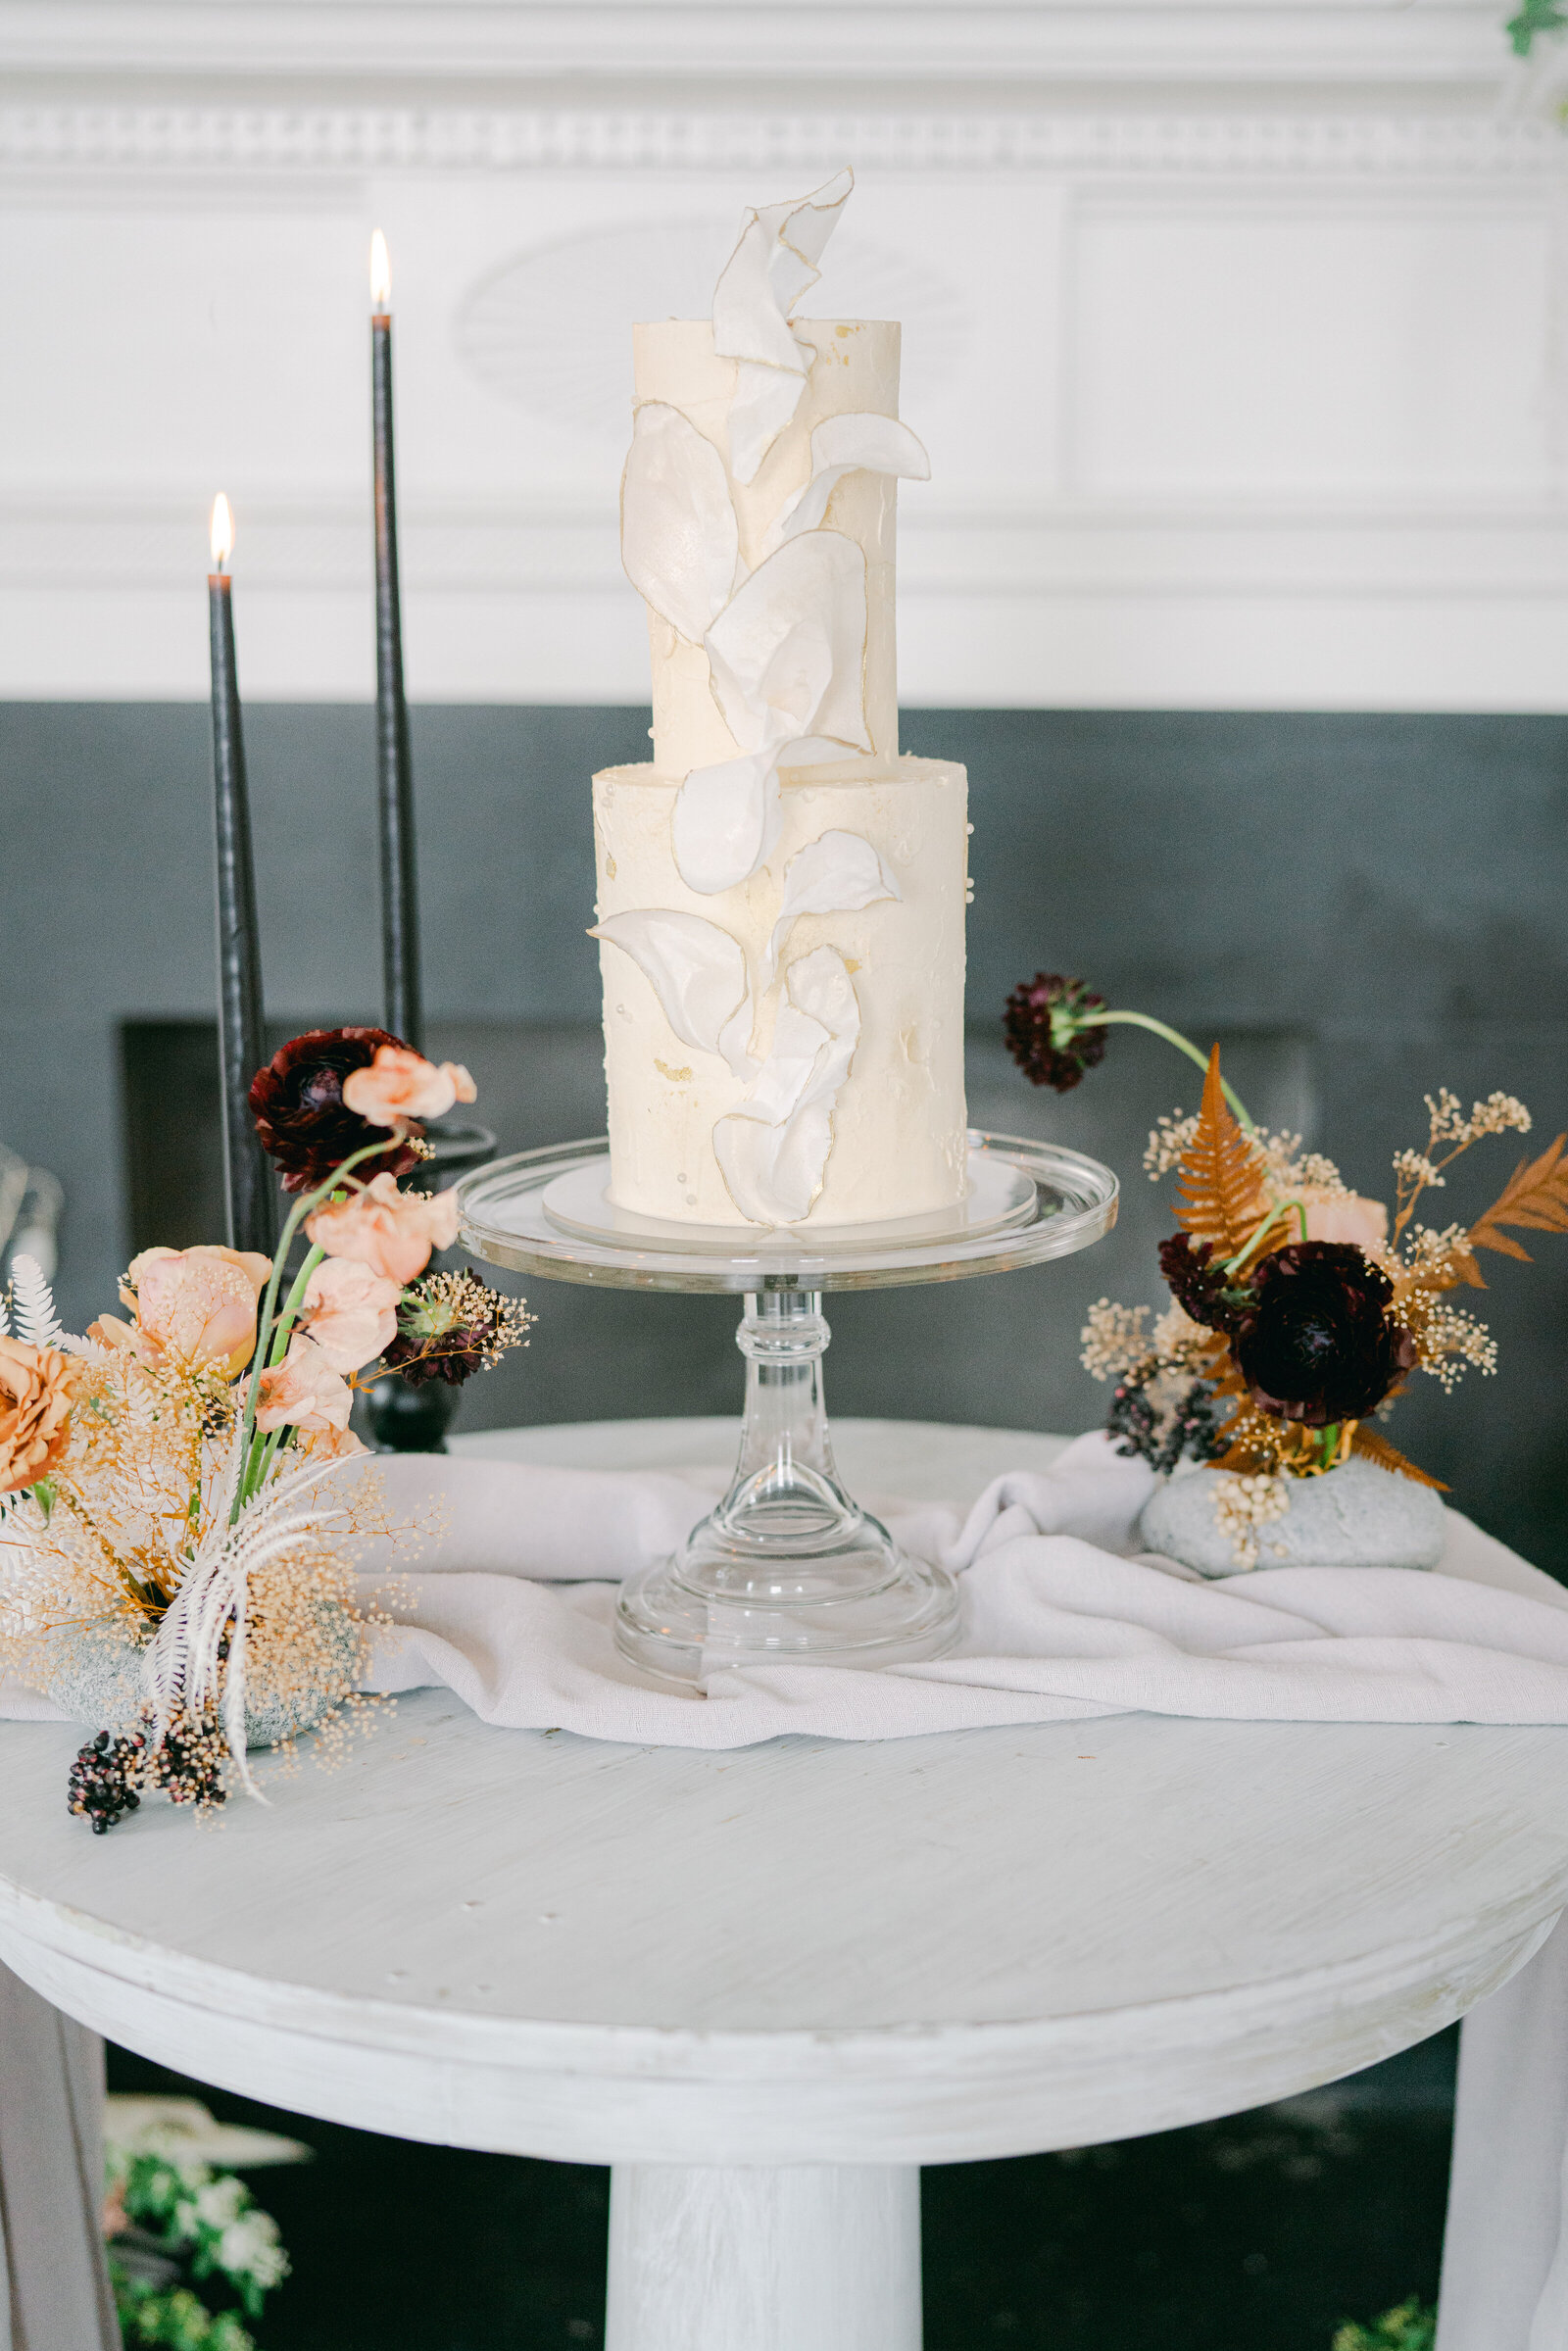 white wedding cake with flowers around it